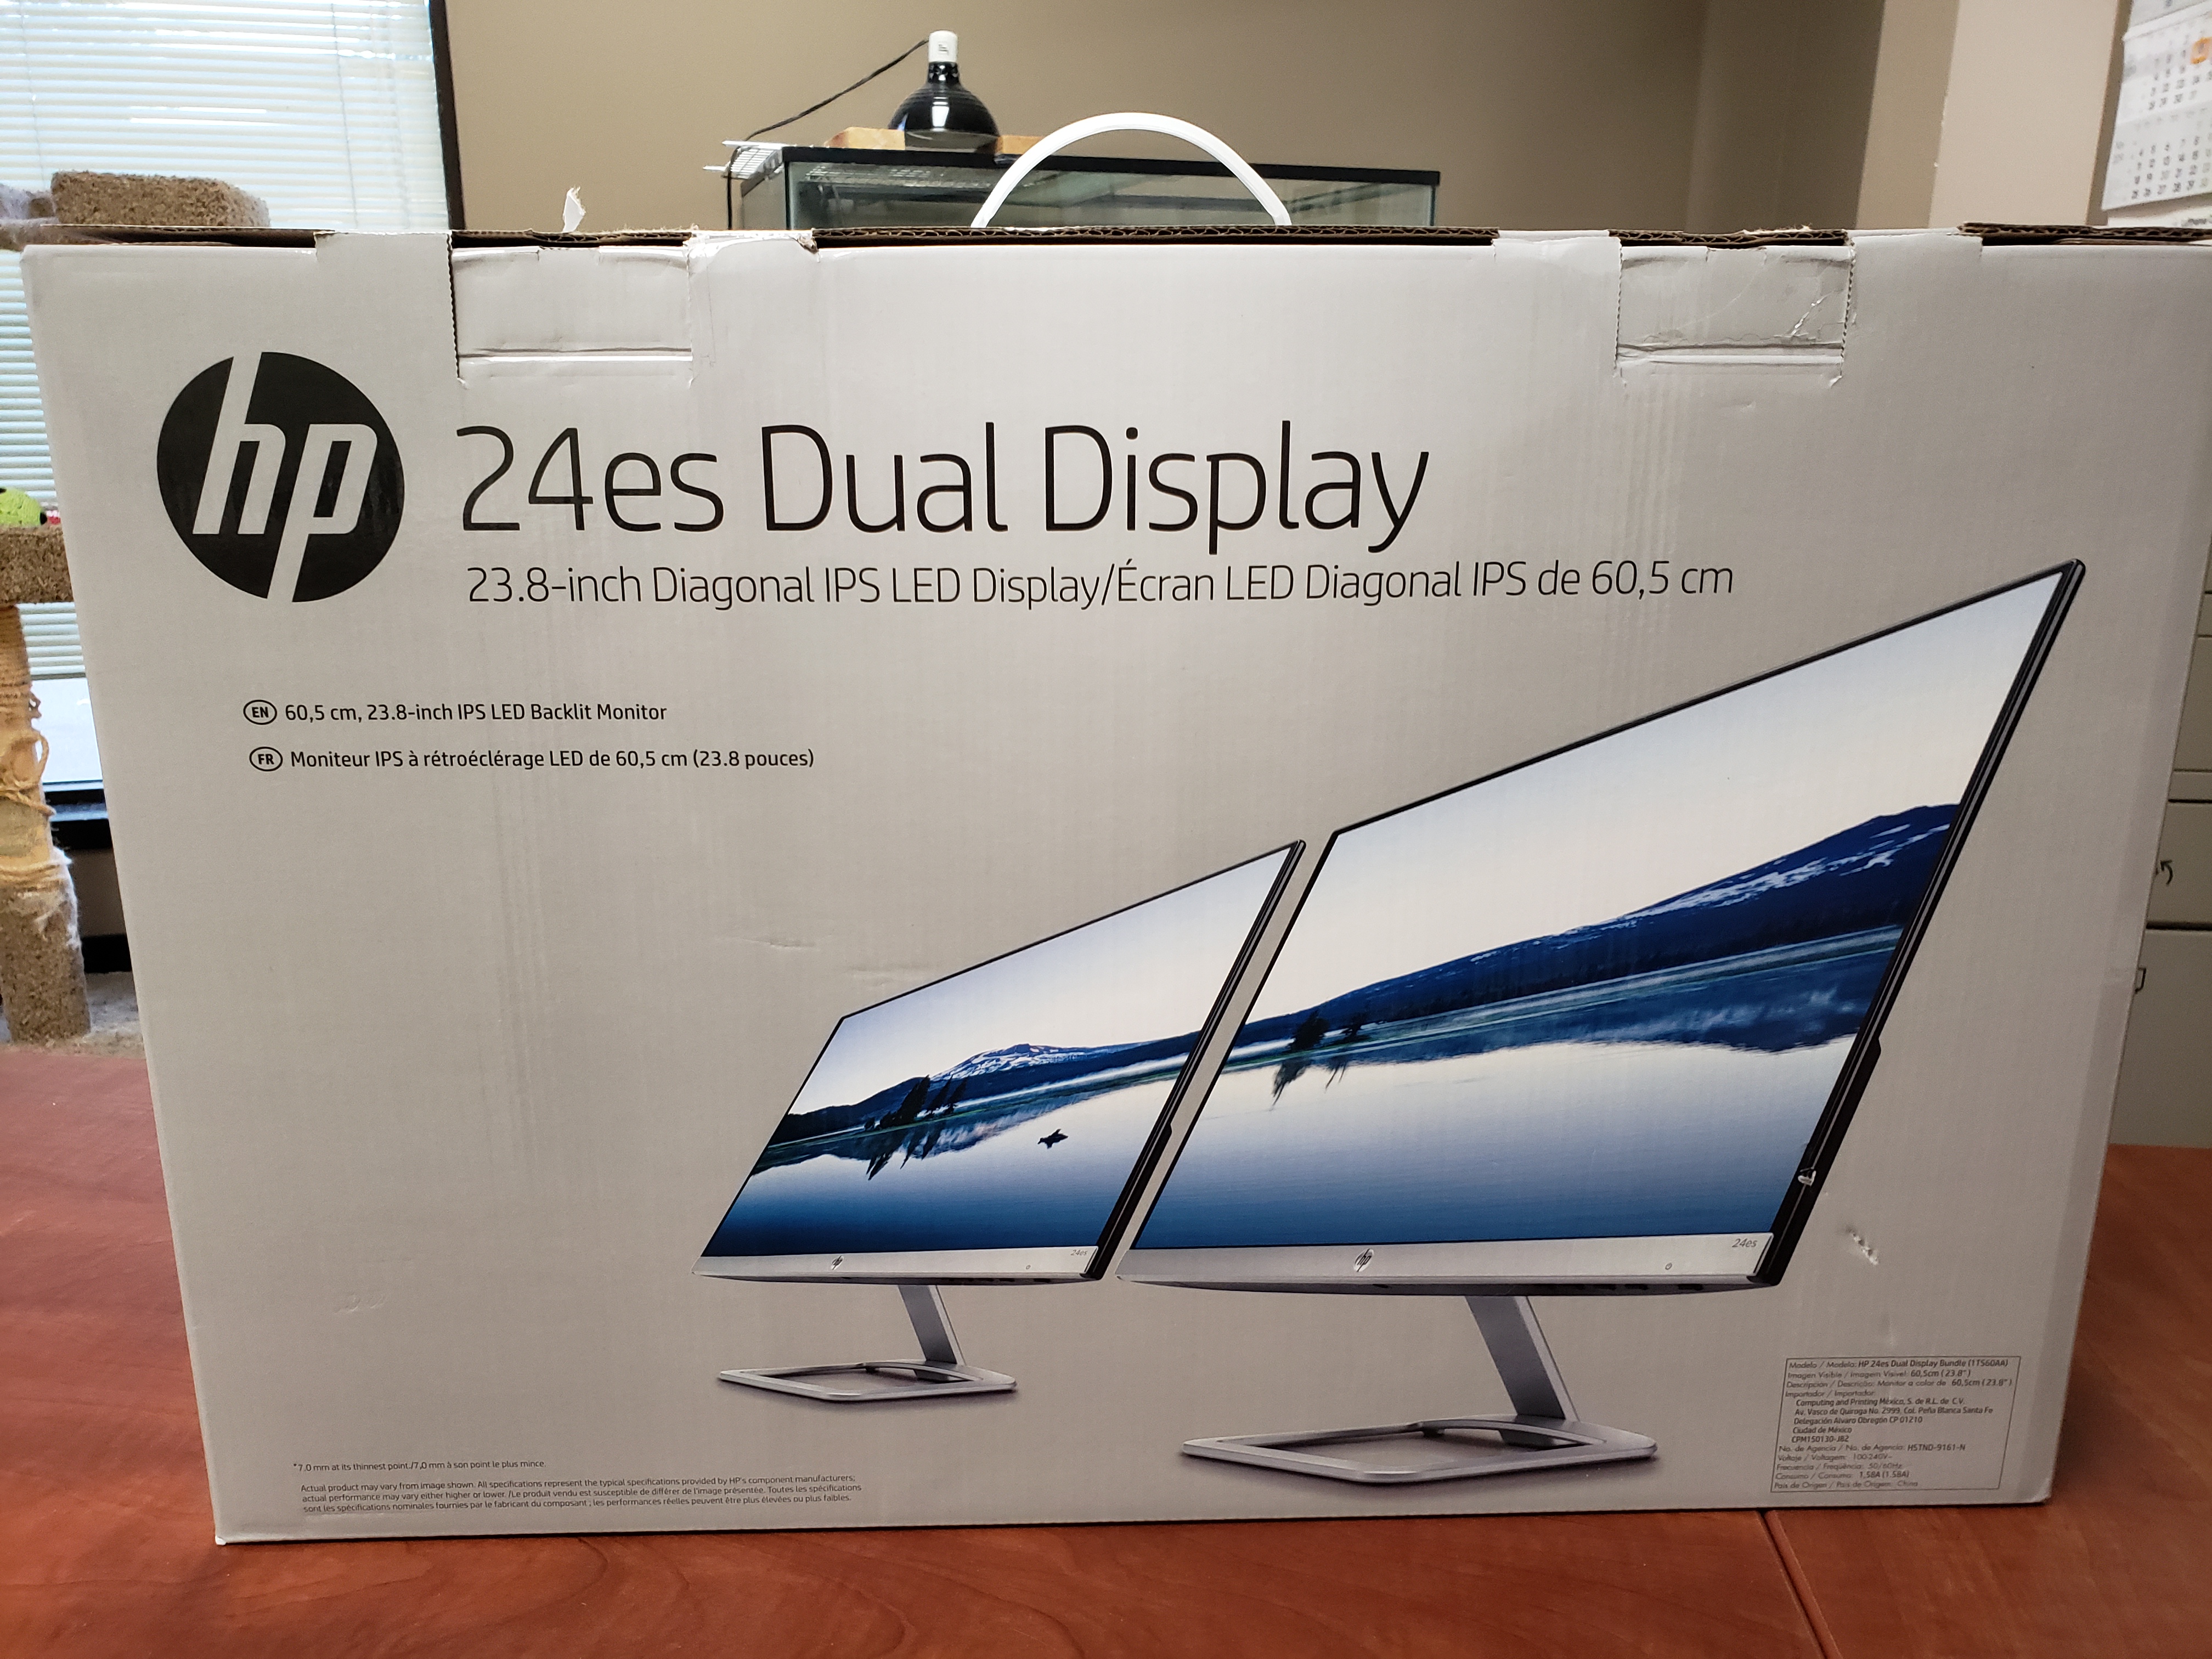 new 24" dual LCD monitors